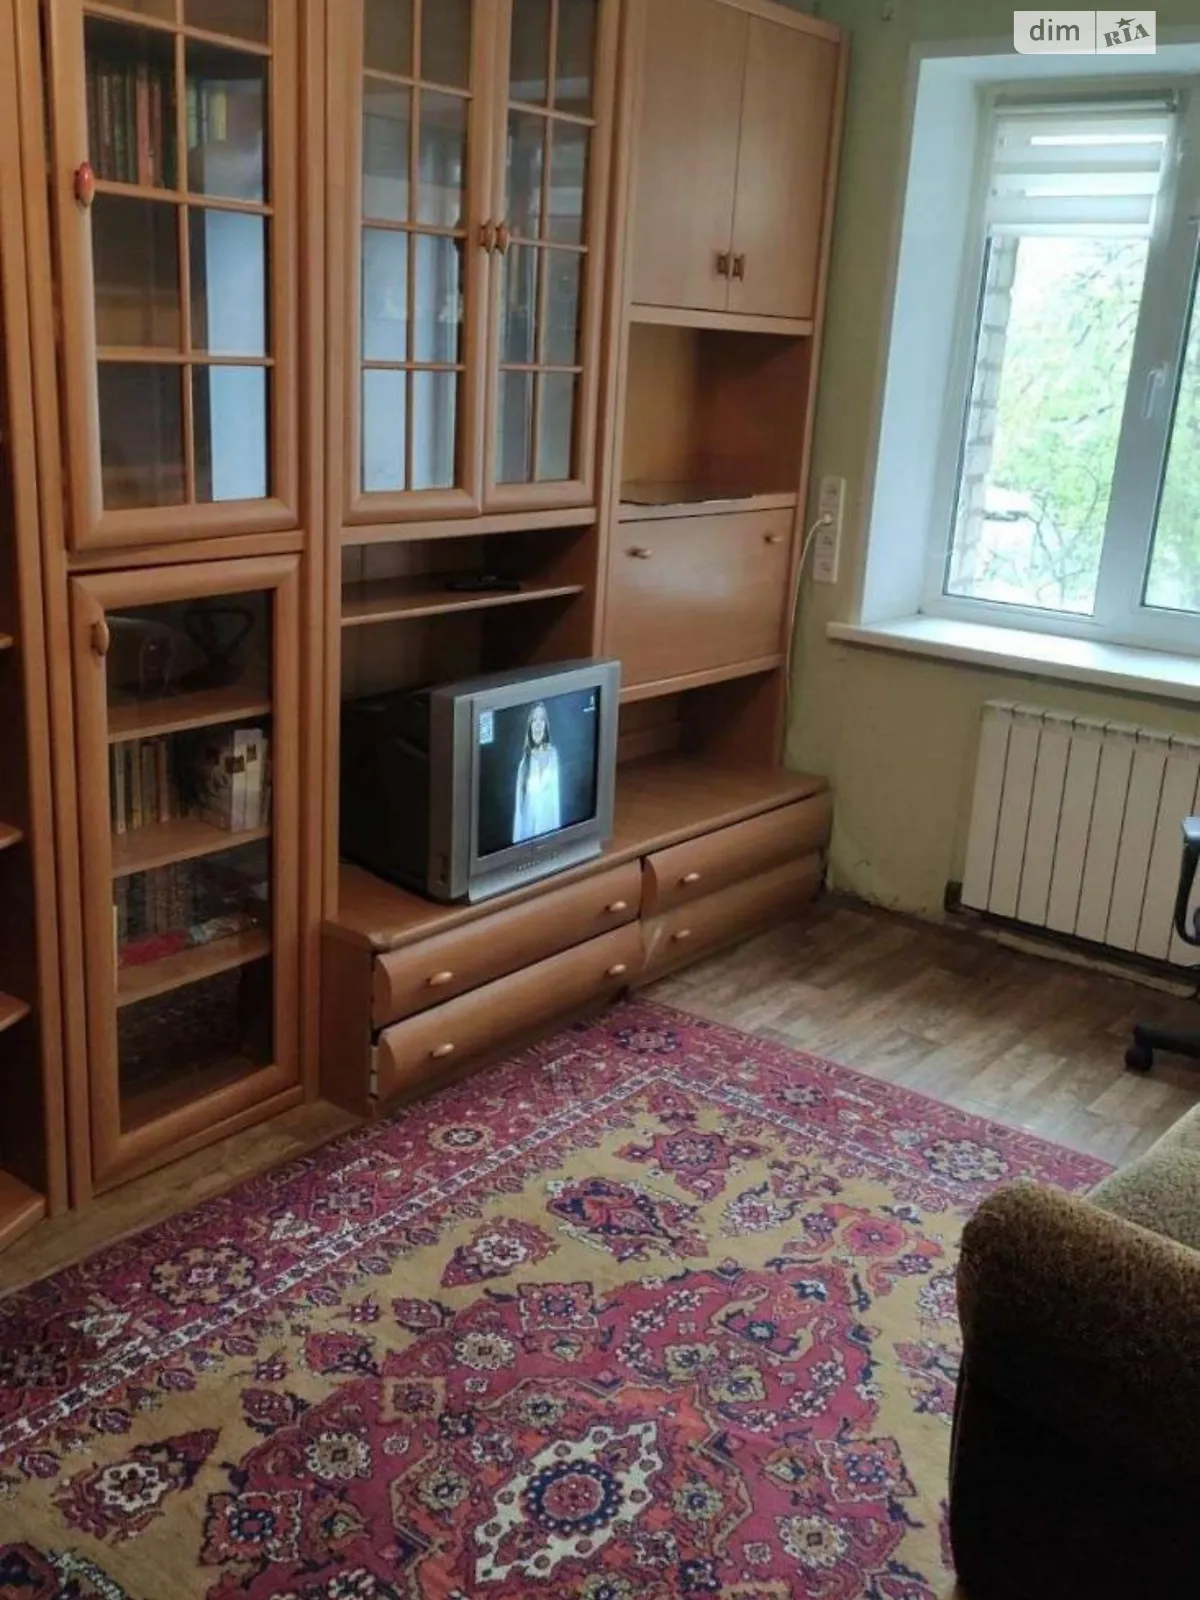 Продается комната 25 кв. м в Харькове - фото 2